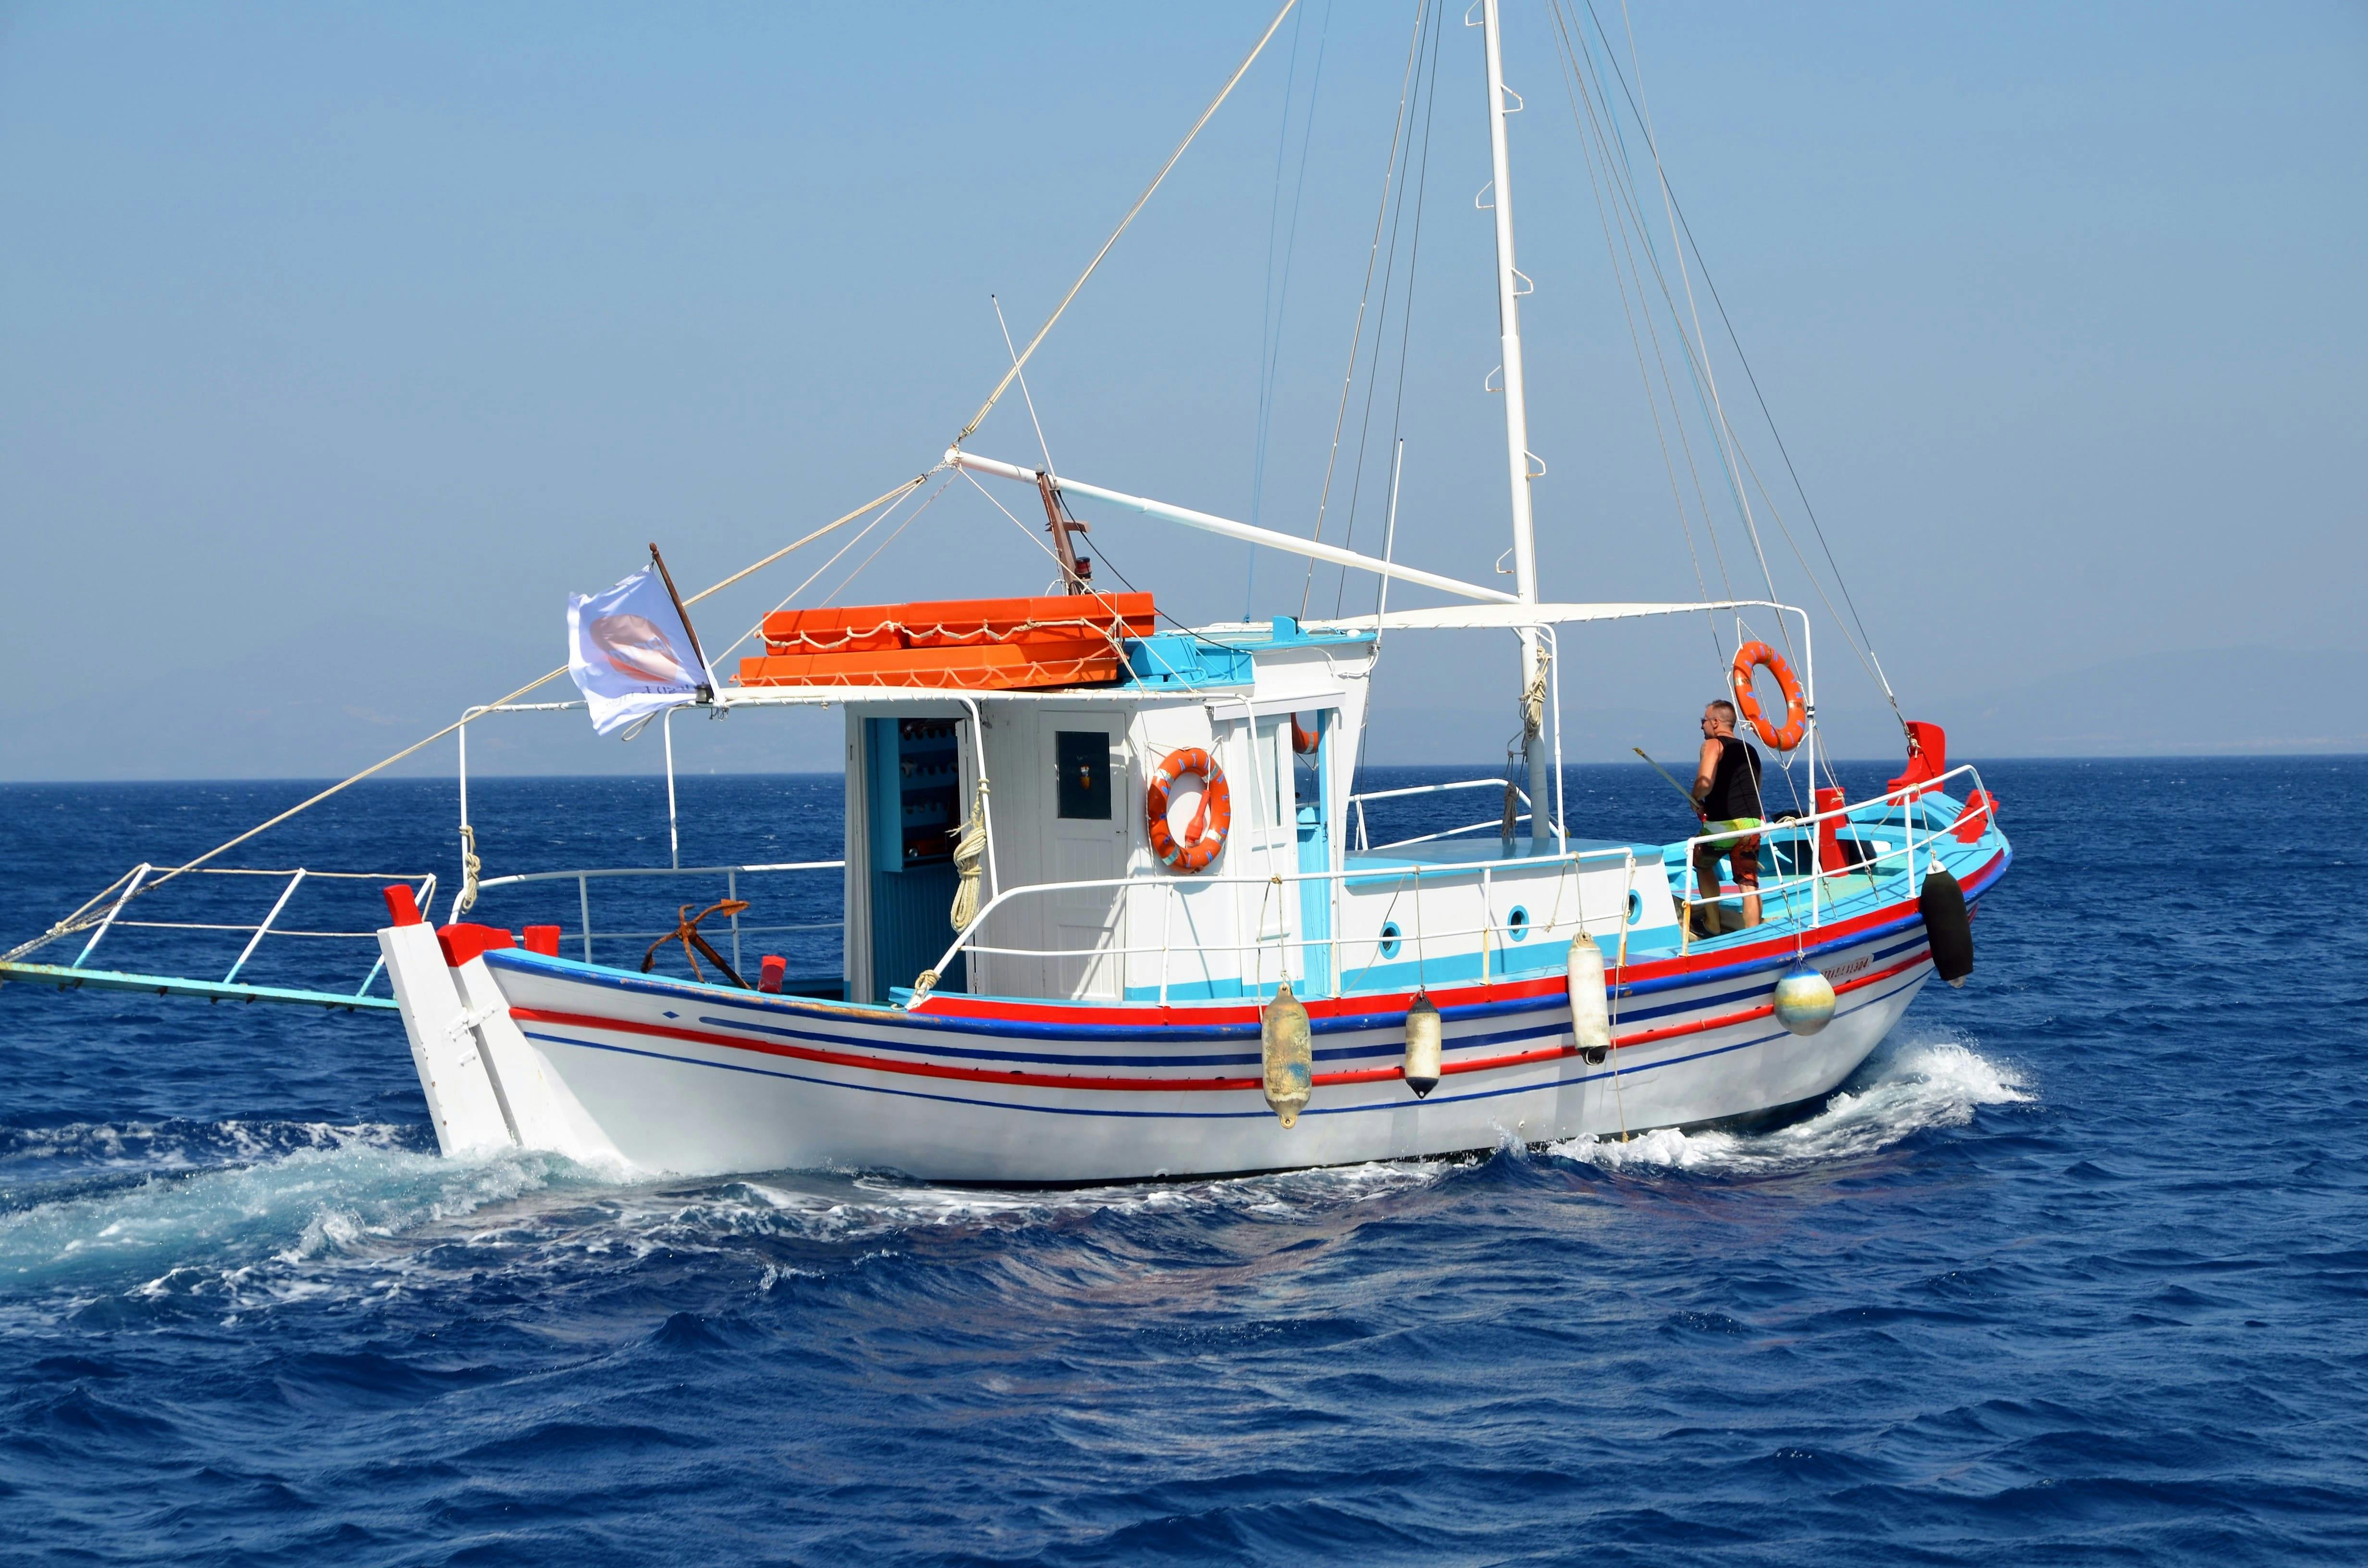 Samiopoula Island Boat Cruise